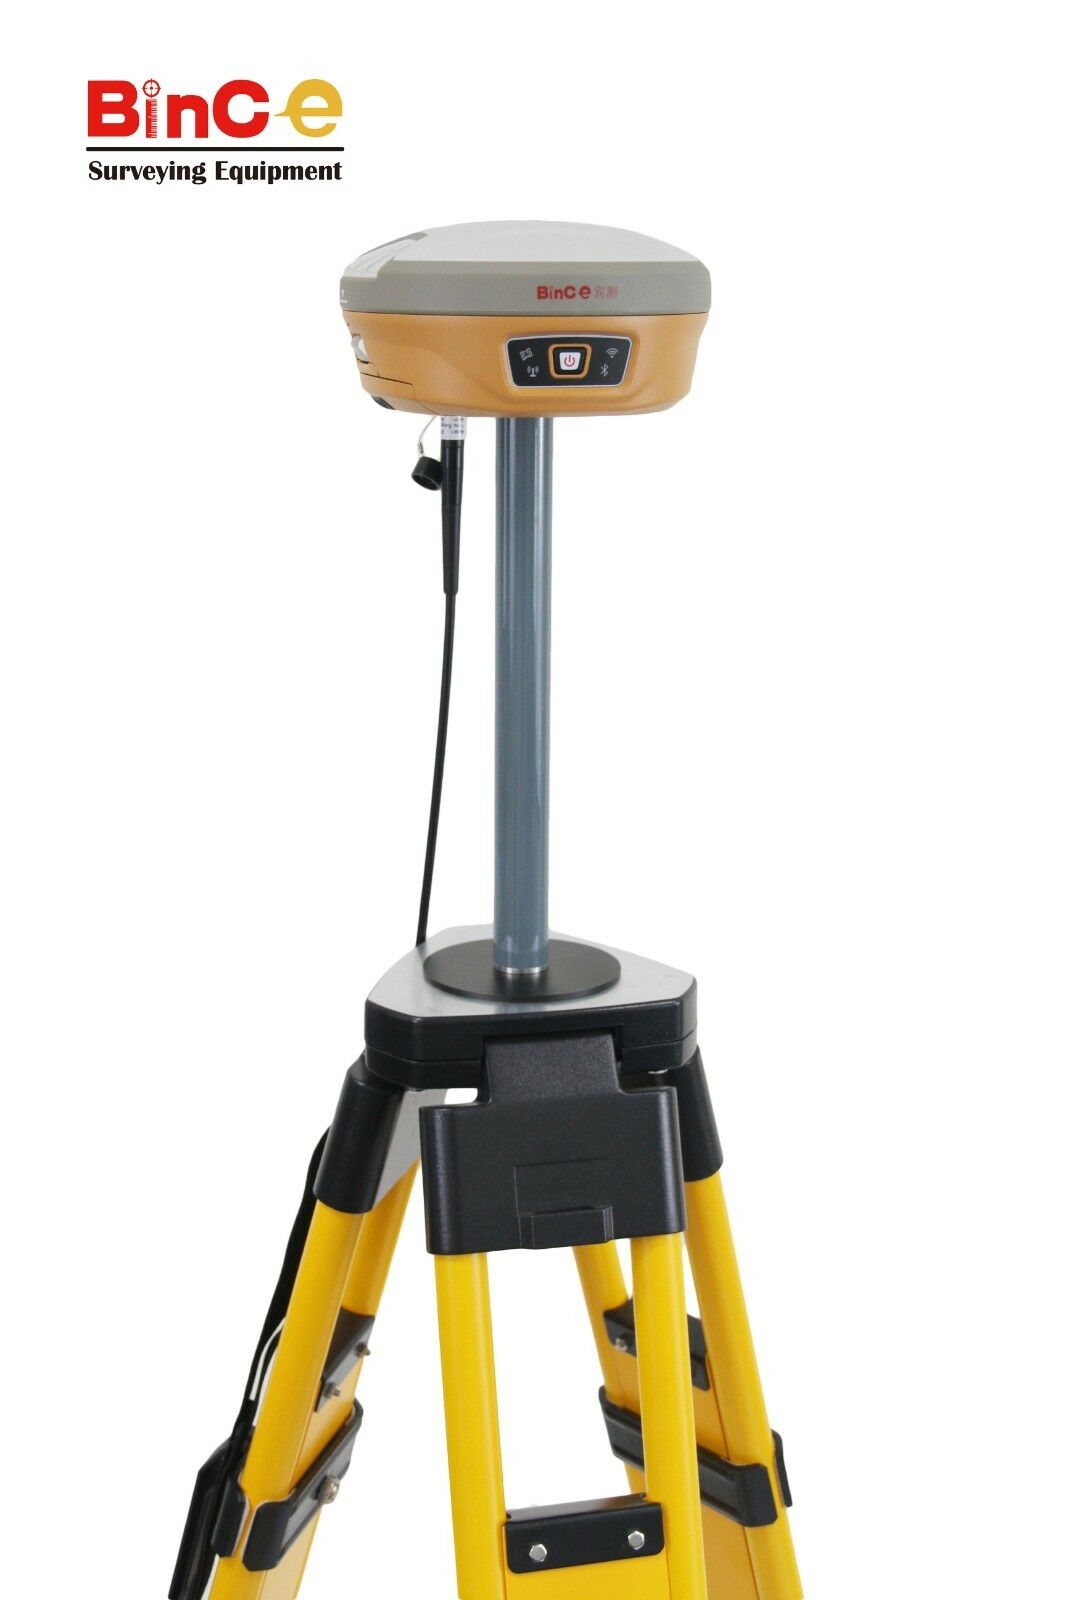 Bince N90 GPS RTK GNSS System Base + Rover (Built-in UHF Radio/4G) Surveying Set Novatel OEM729 Main Board